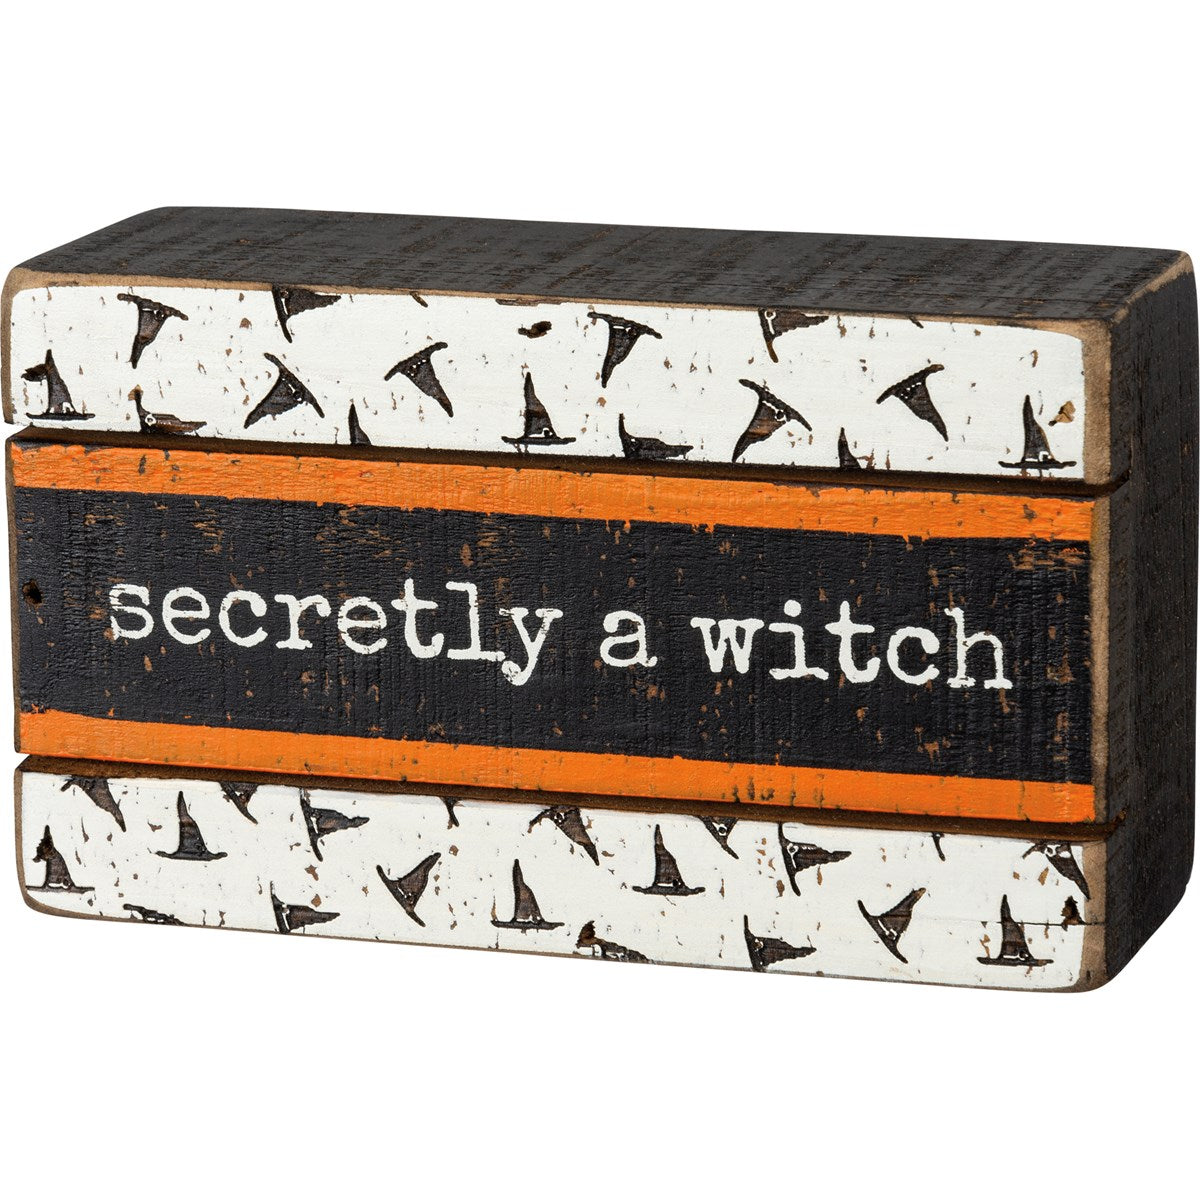 Secretly a Witch